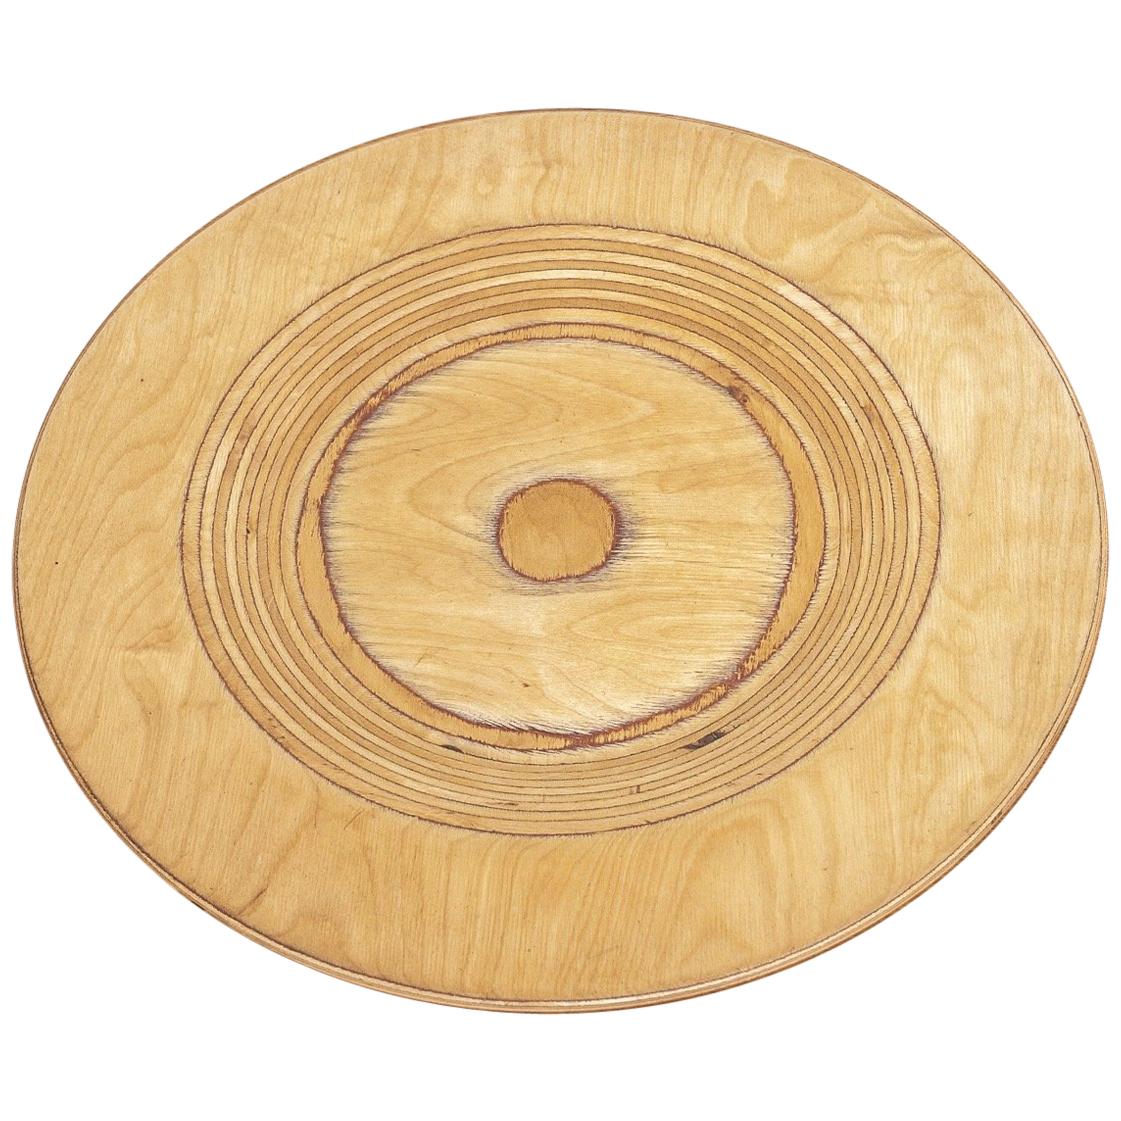 Midcentury Finnish Modern Wooden Plate by Saarinen for Keuruu